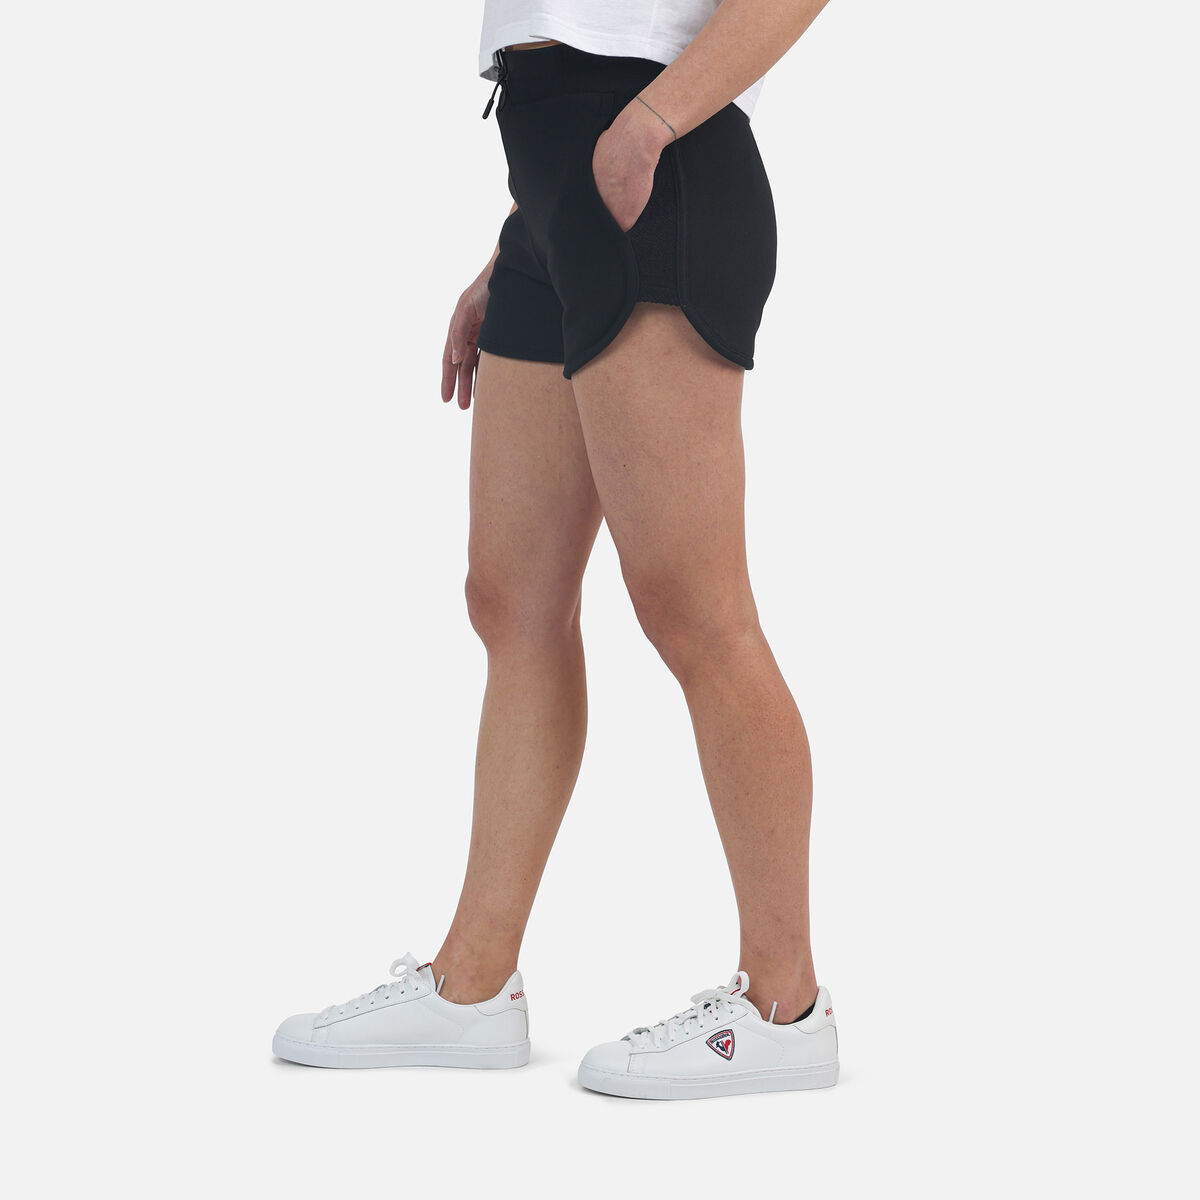 Rossignol Women's cotton comfortable shorts Black